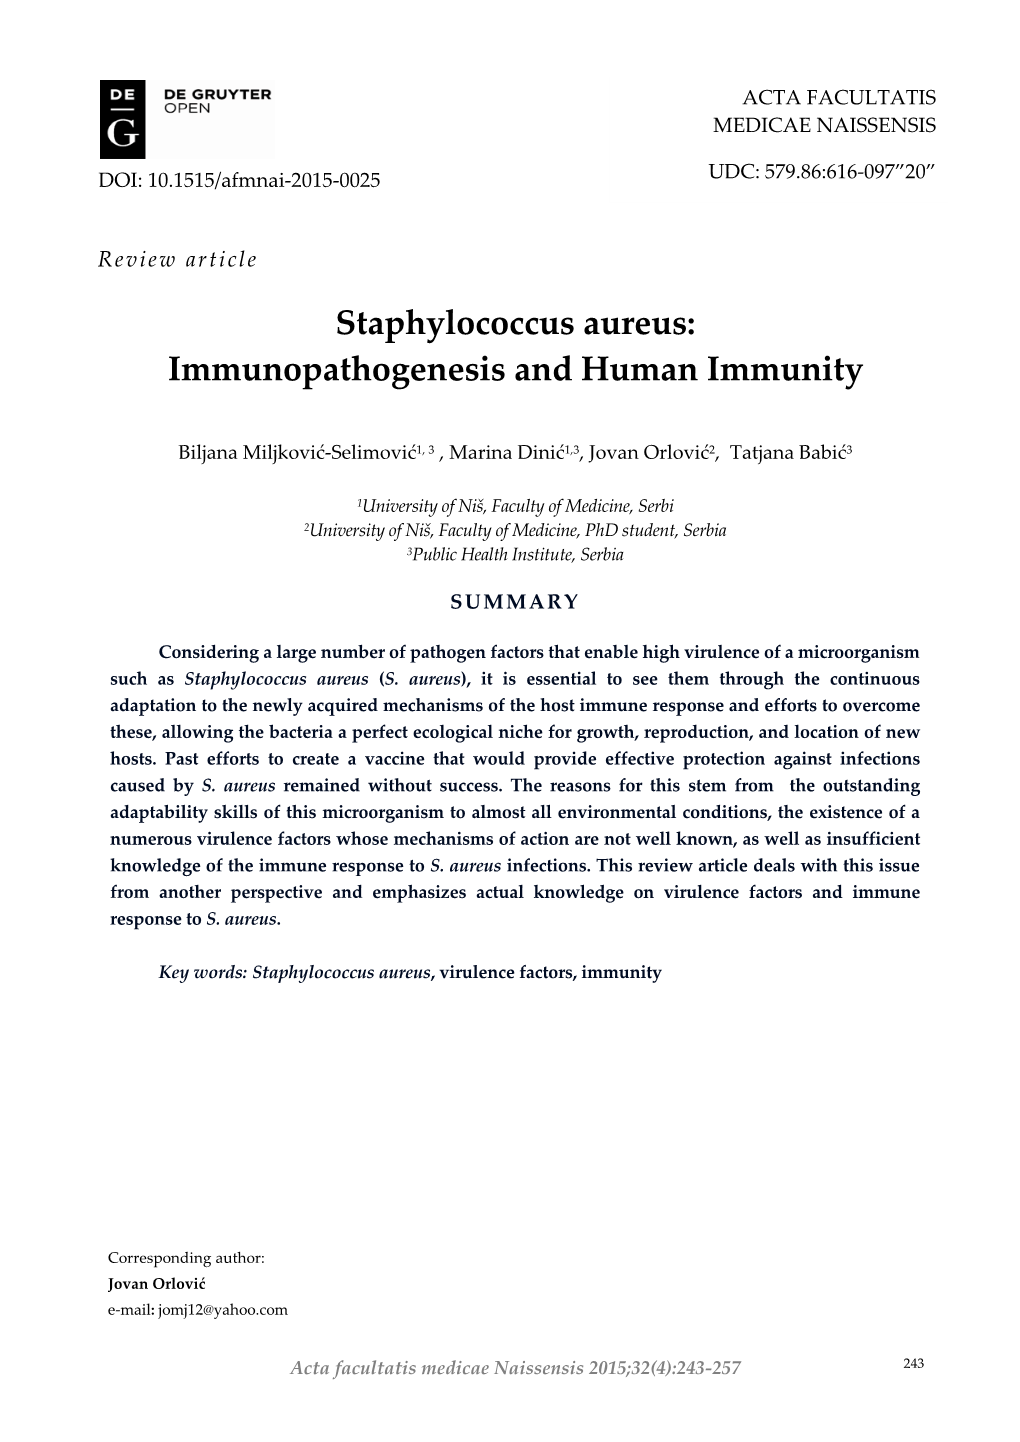 Staphylococcus Aureus: Immunopathogenesis and Human Immunity